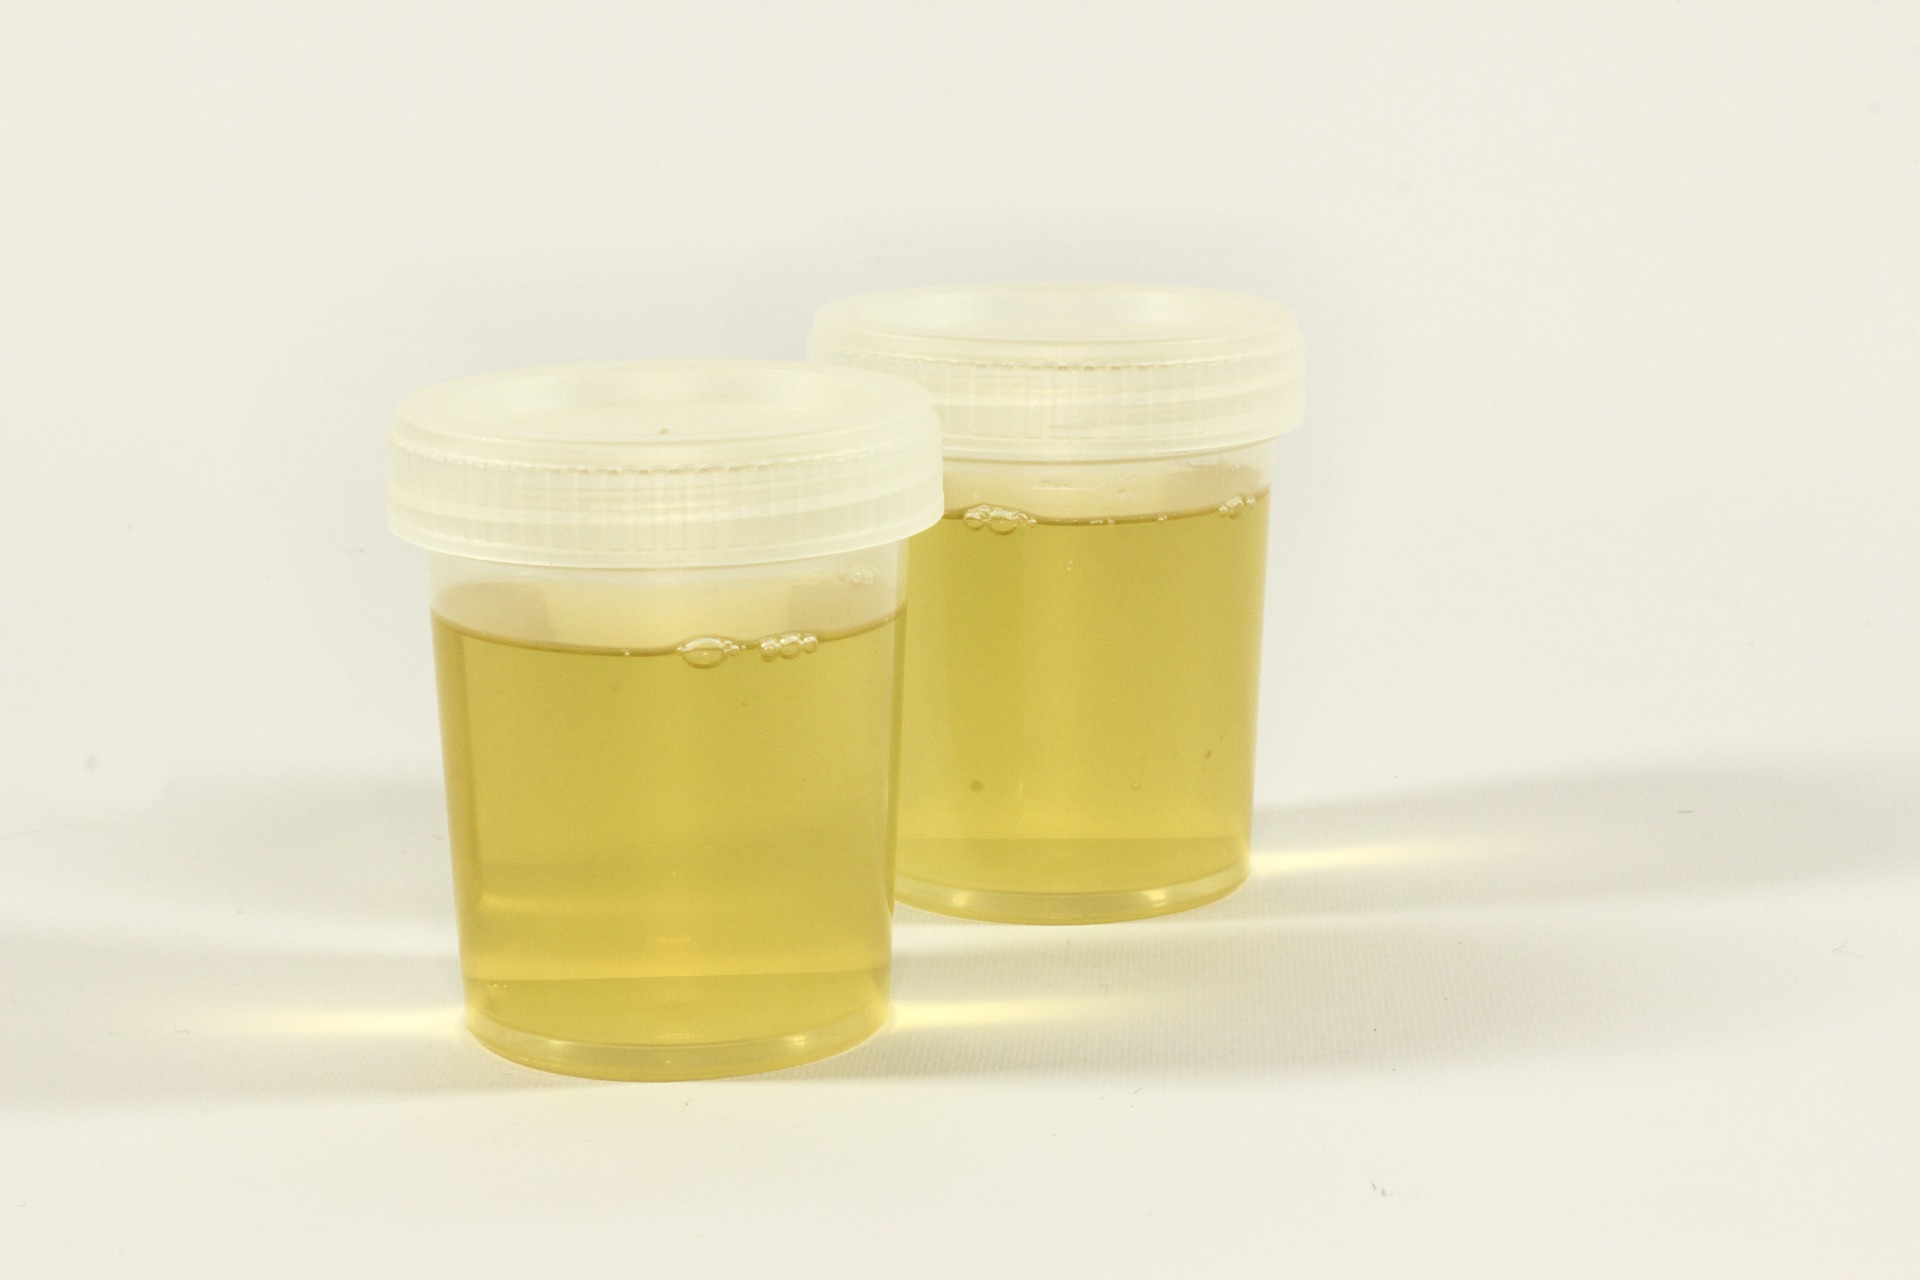 TDDA urine testing cups